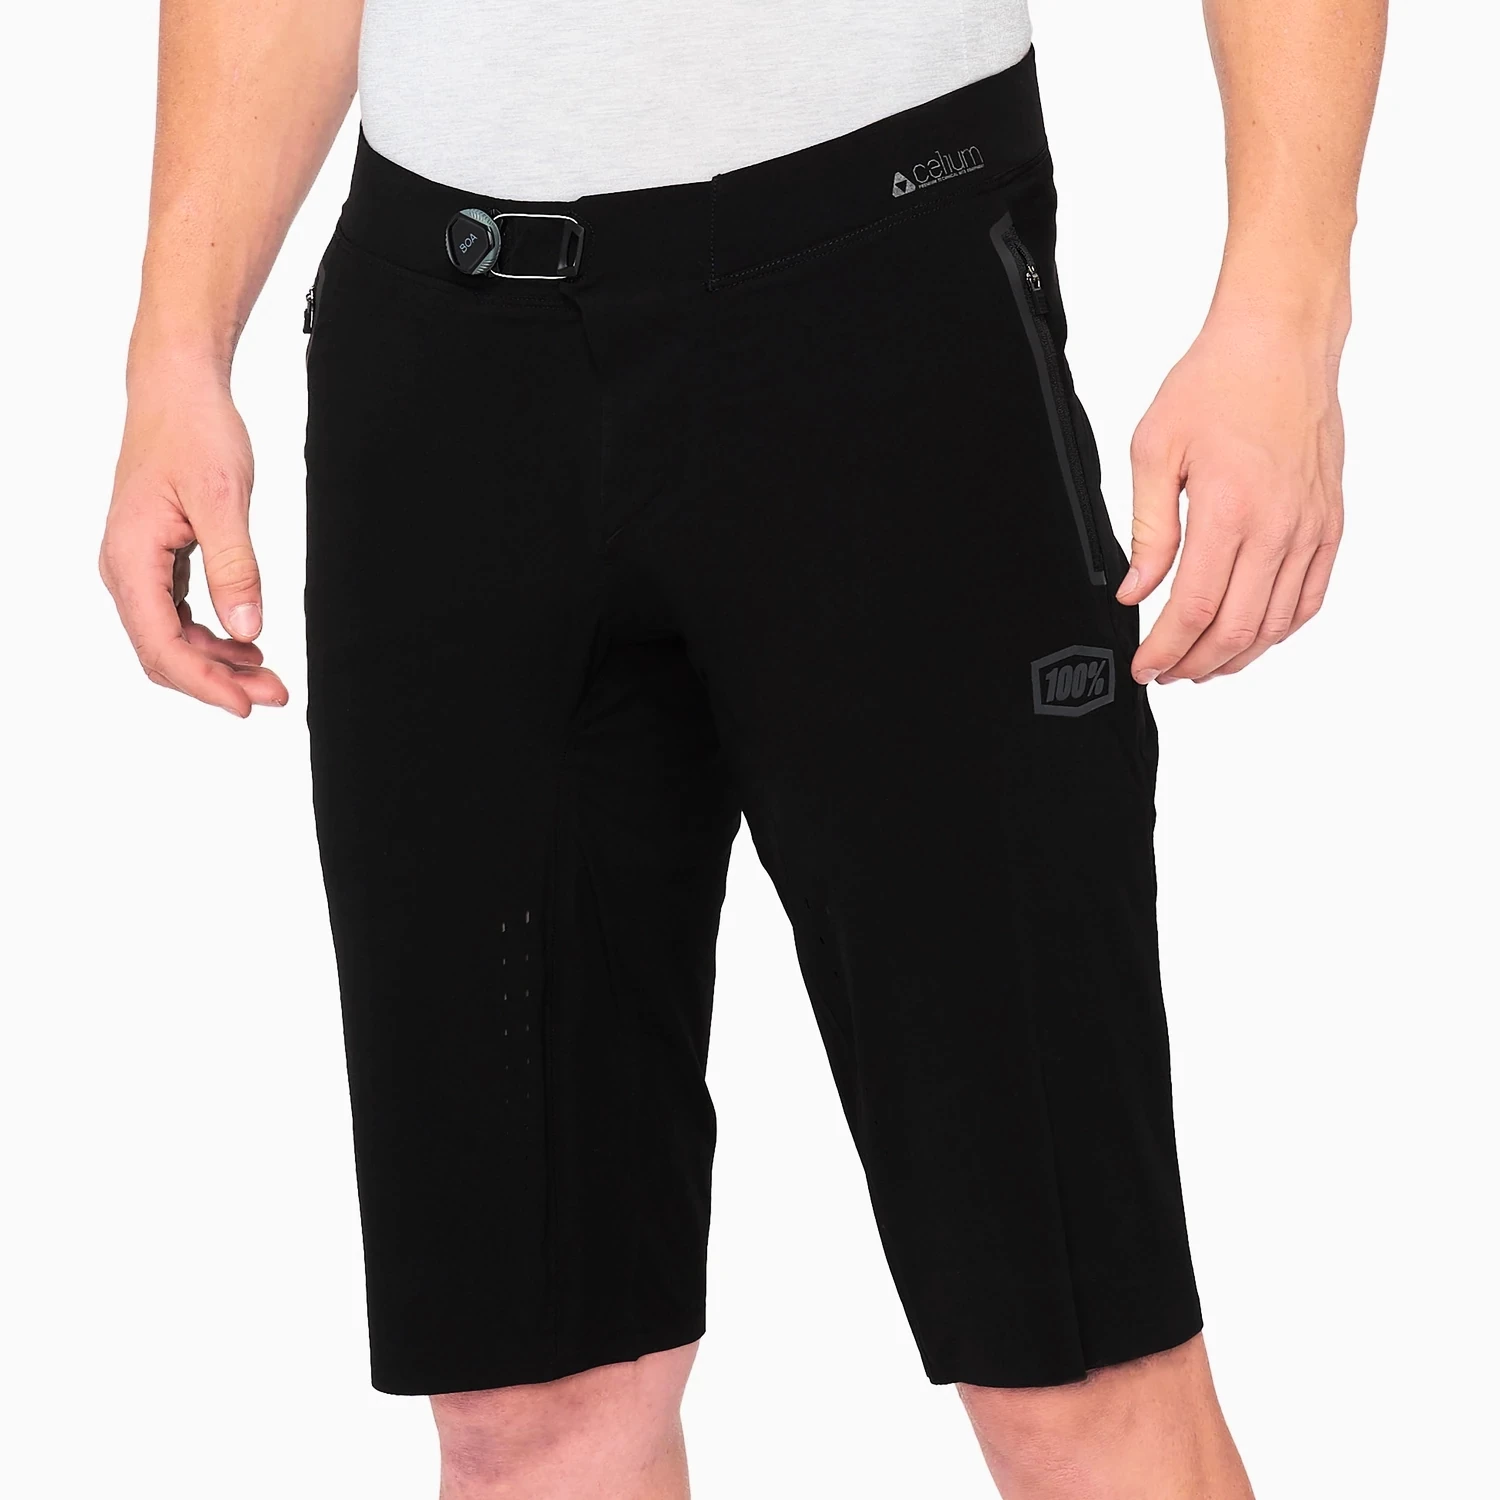 Men's cycling shorts 100% Celium